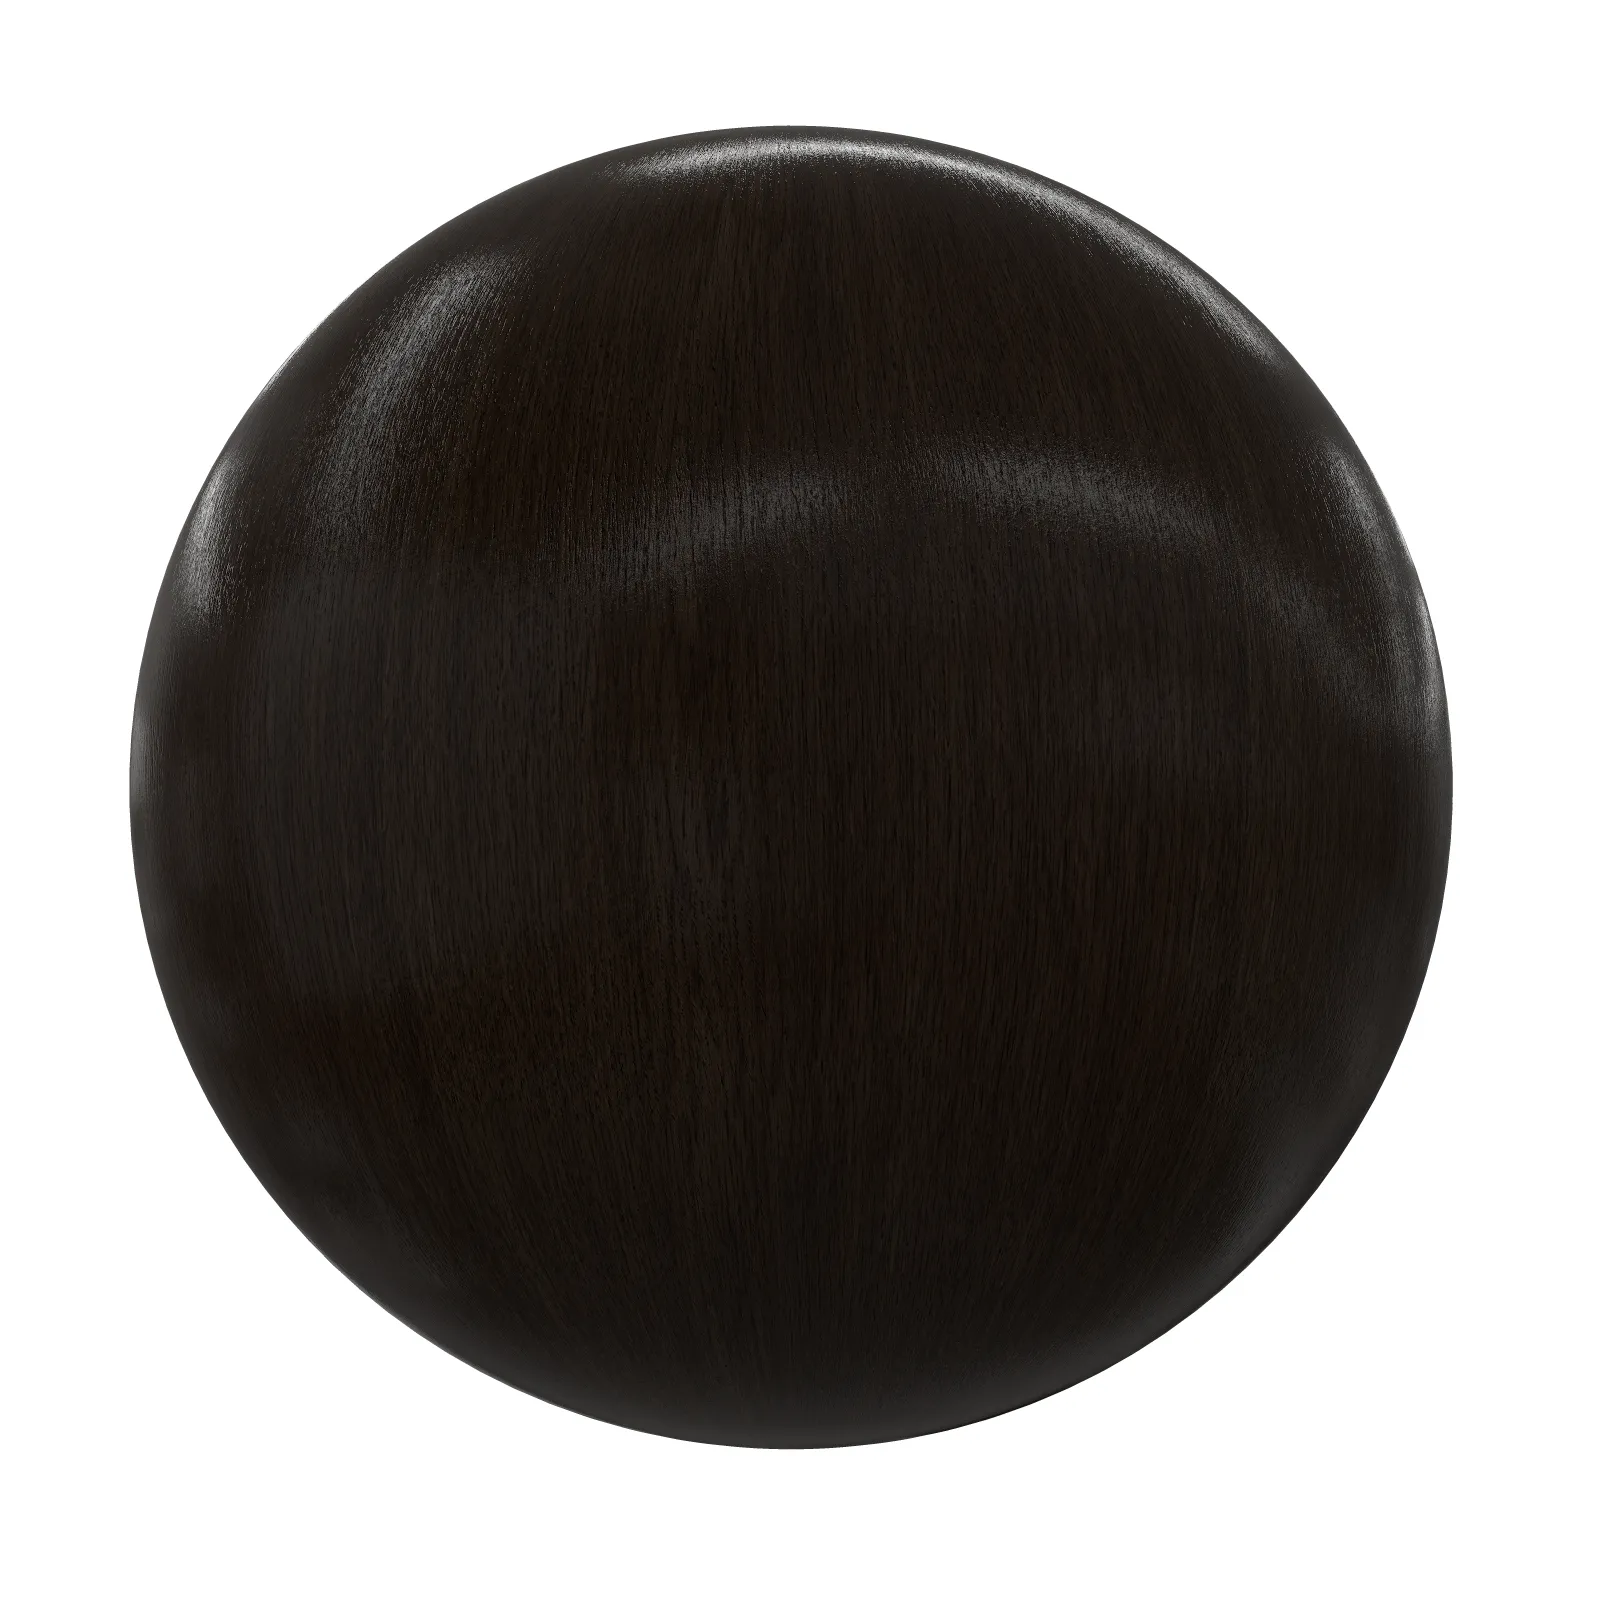 3ds Max Files – Texture – 8 – Wood Texture – 75 – Wood Texture by Minh Nguyen